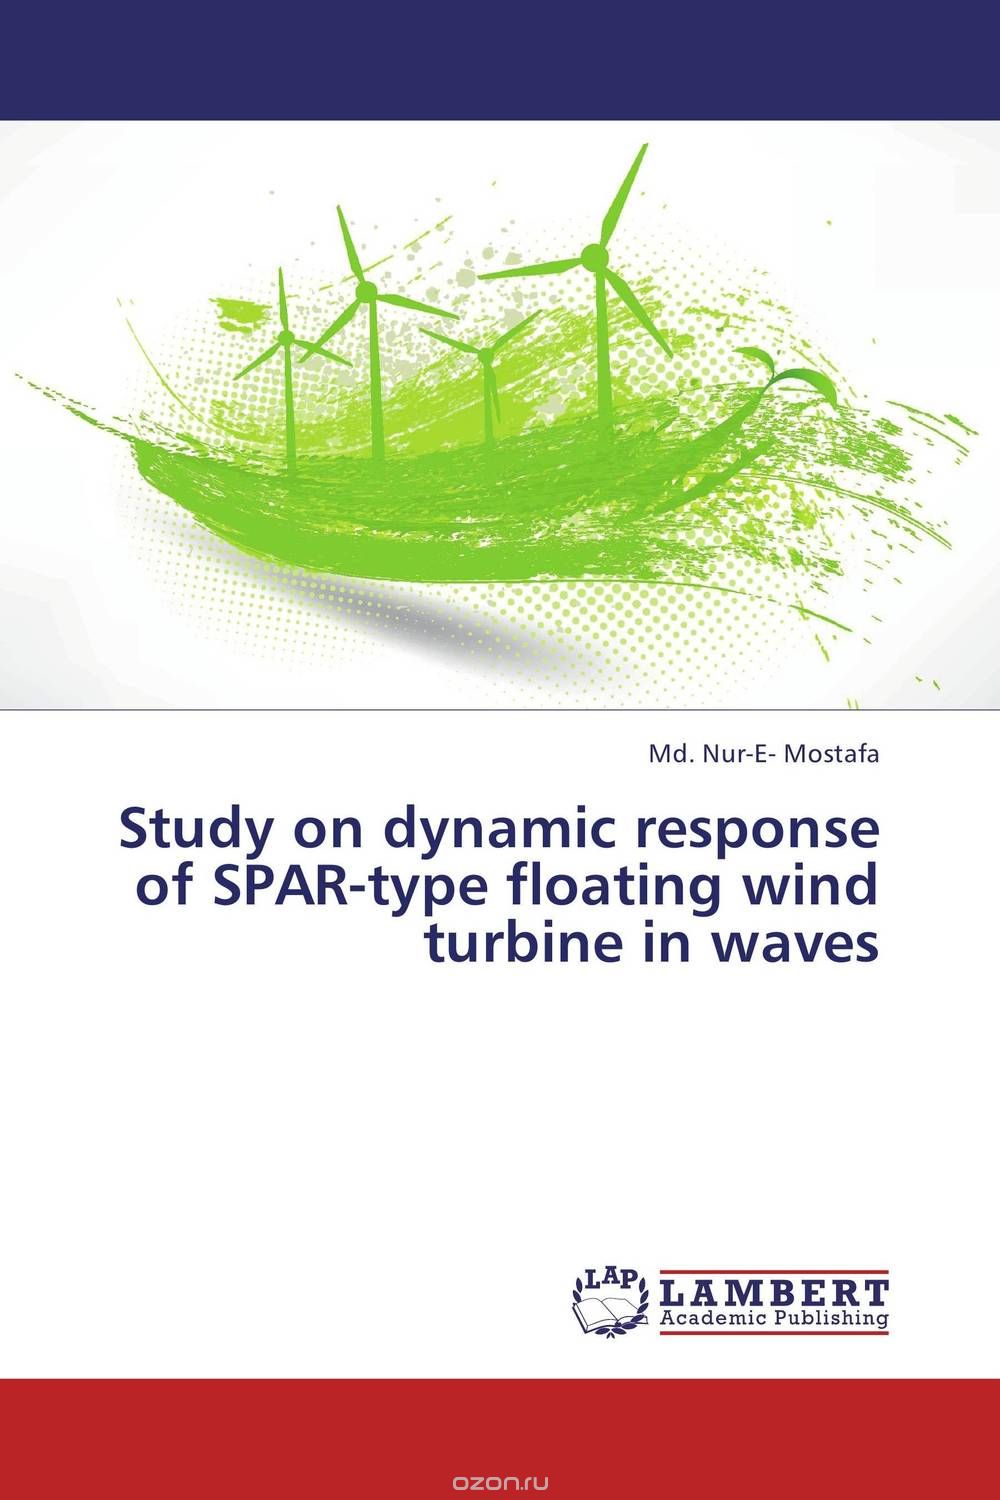 Скачать книгу "Study on dynamic response of SPAR-type floating wind turbine in waves"